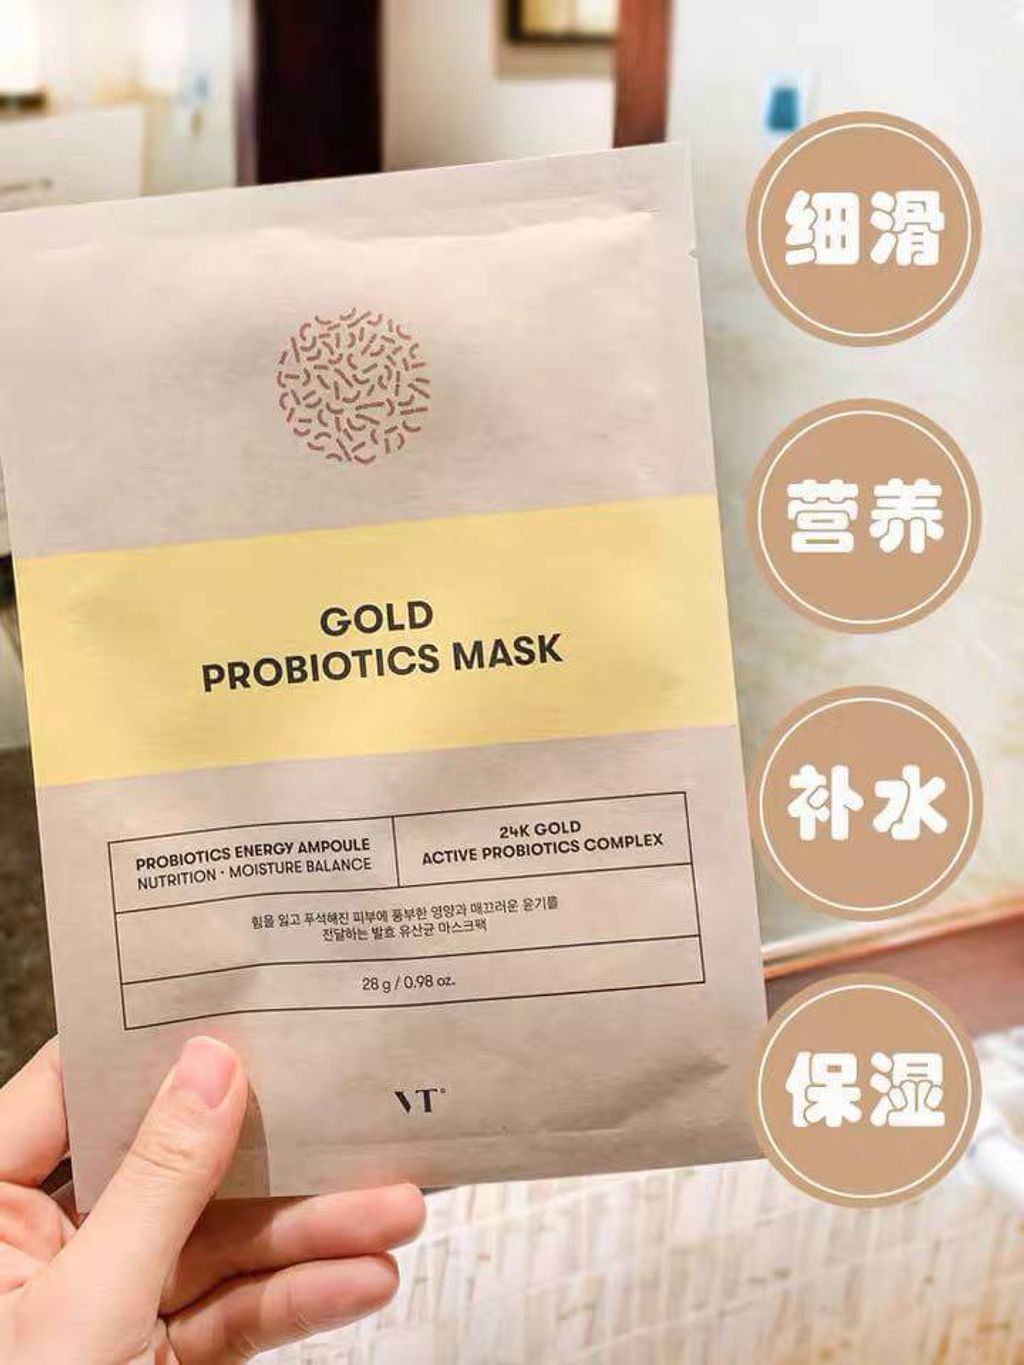 JuzBeauty_JuzBeautyMalaysia_JuzPretty_Authentic_Kbeauty_Malaysia_Skin_Care_Cosmetics_Jbeauty_Australia_Health_Care_VT_Gold_Probiotics_Mask_ (6).jpg